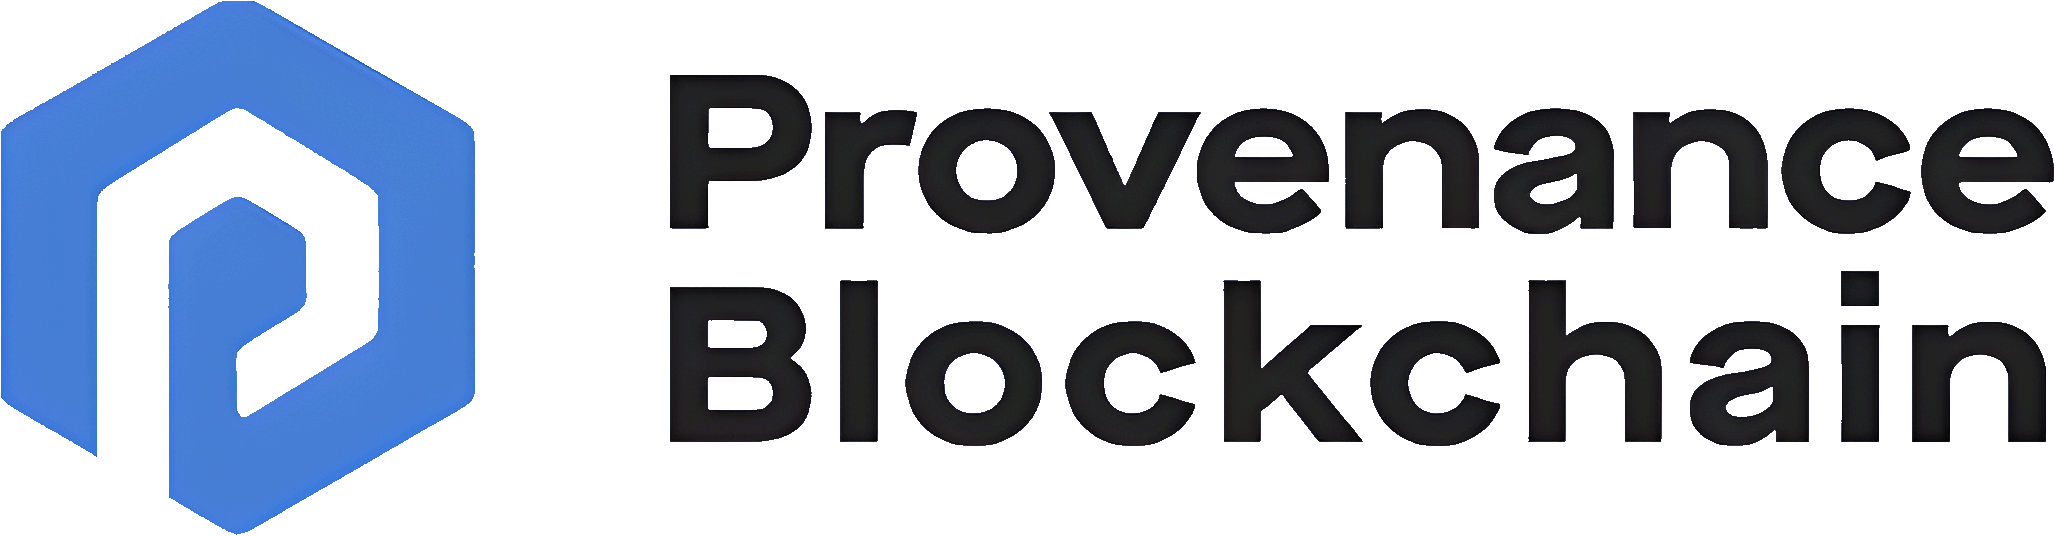 provenance blockchain foundation